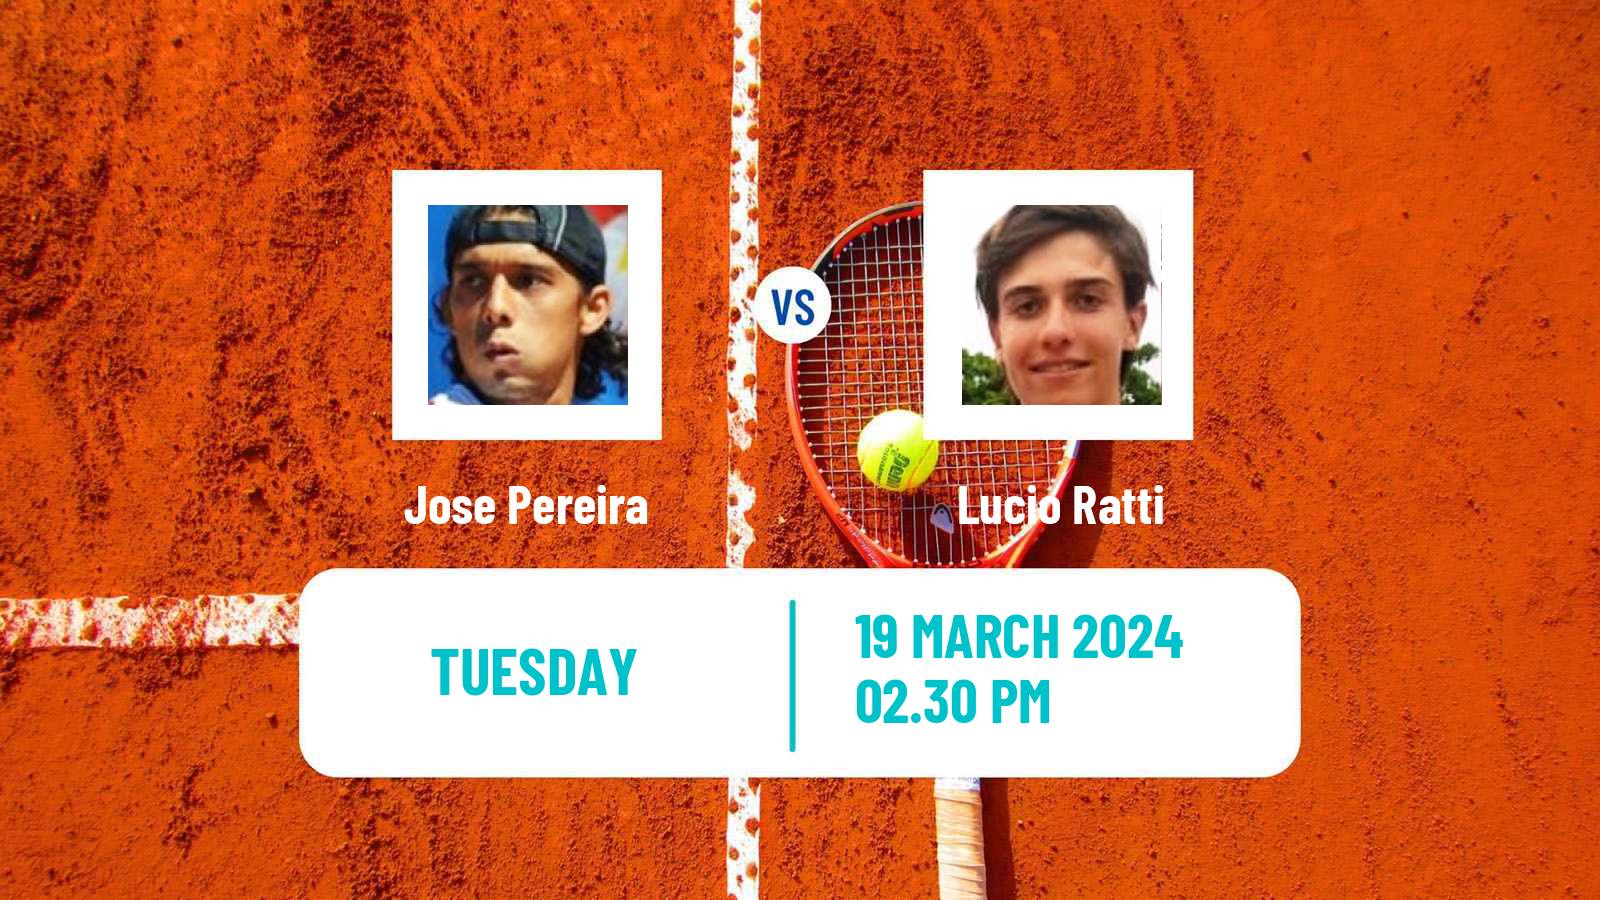 Tennis ITF M25 Maceio Men Jose Pereira - Lucio Ratti